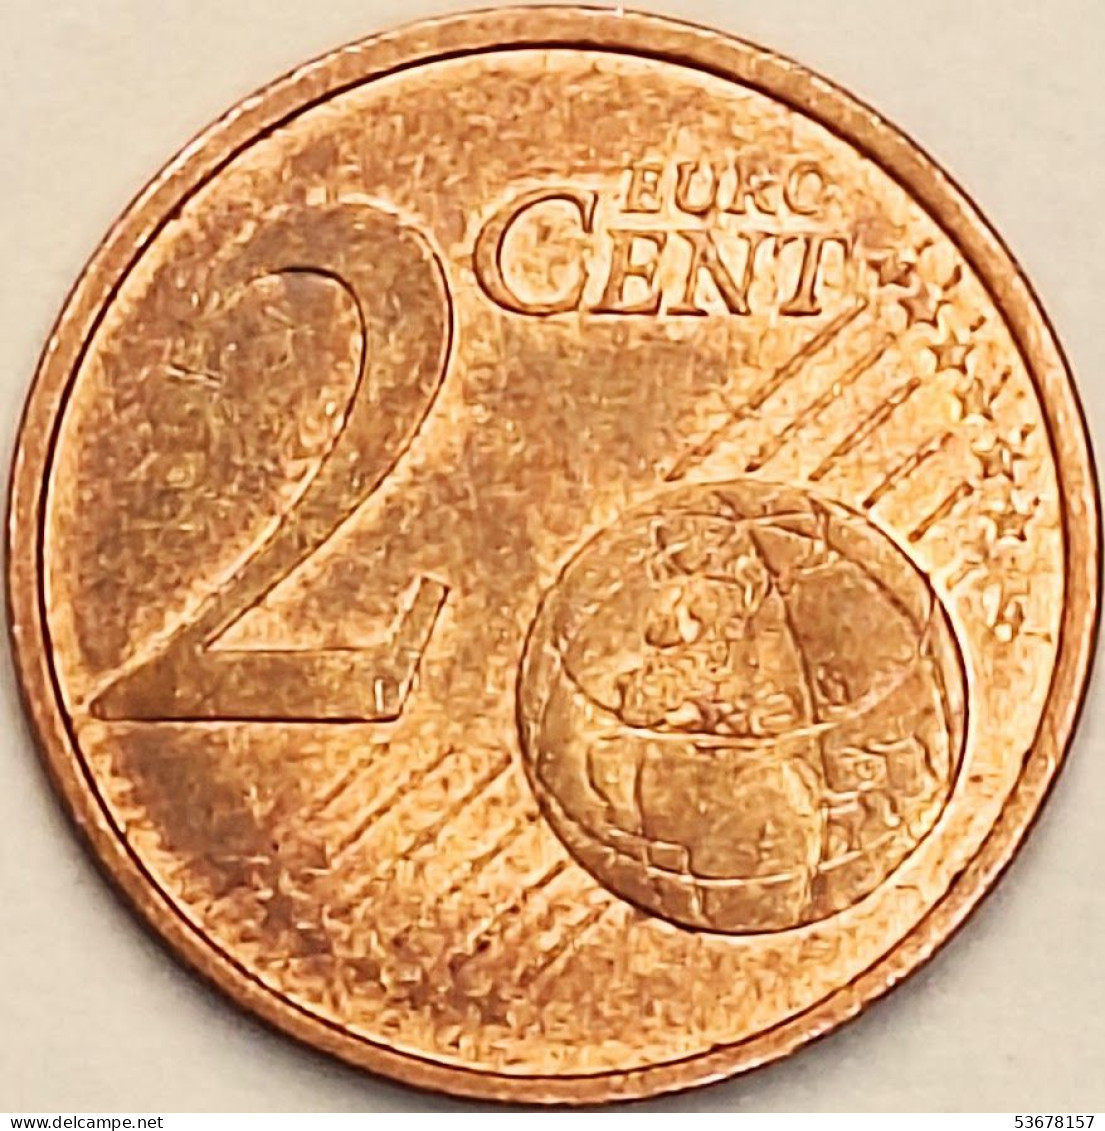 France - 2 Euro Cent 2006, KM# 1283 (#4374) - France